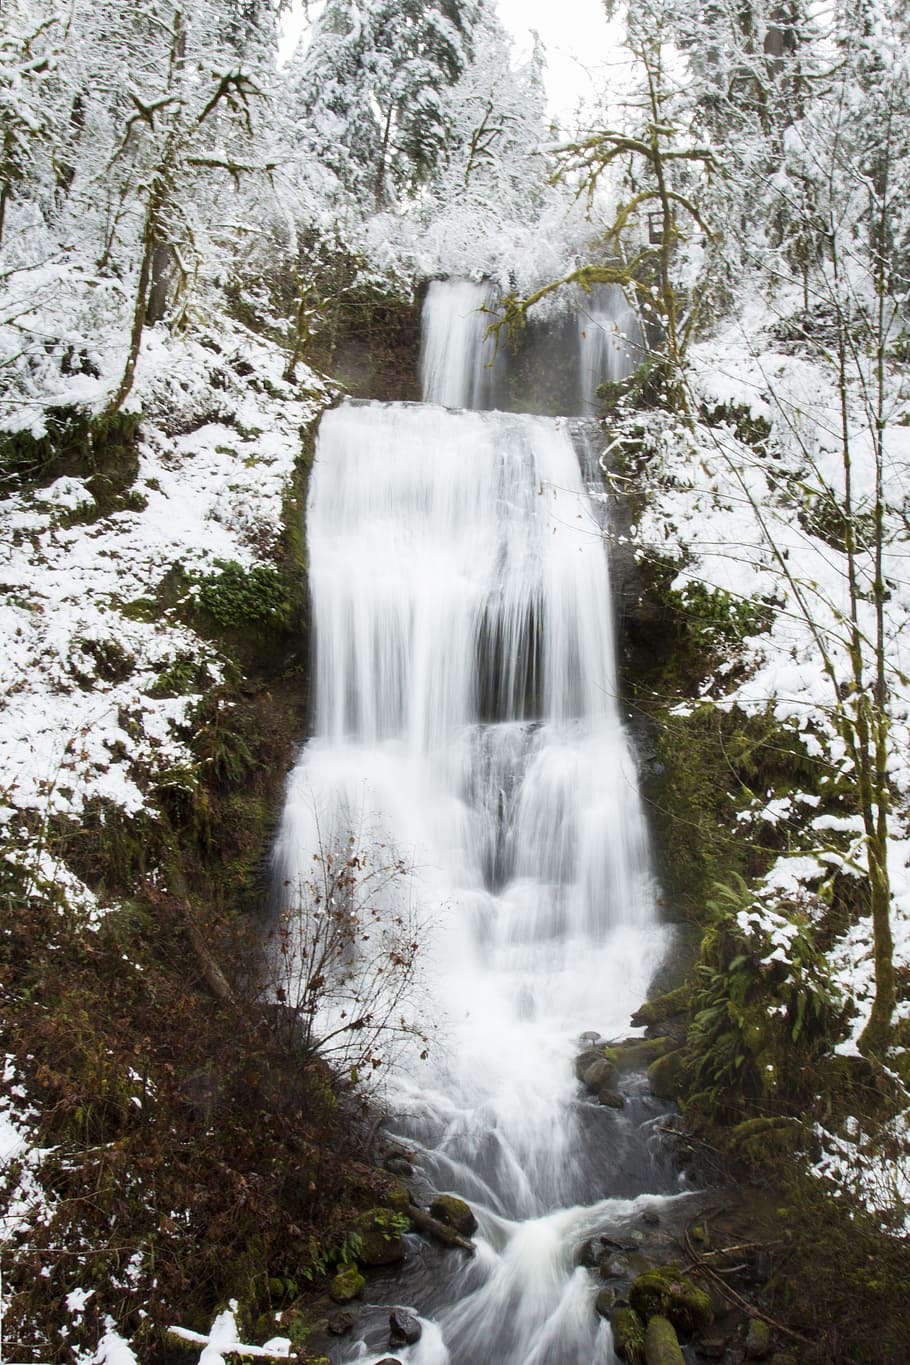 Royal, Terrace, Falls, snow, Oregon, waterfall between trees, waterfall, scenics - nature, beauty in nature, tree